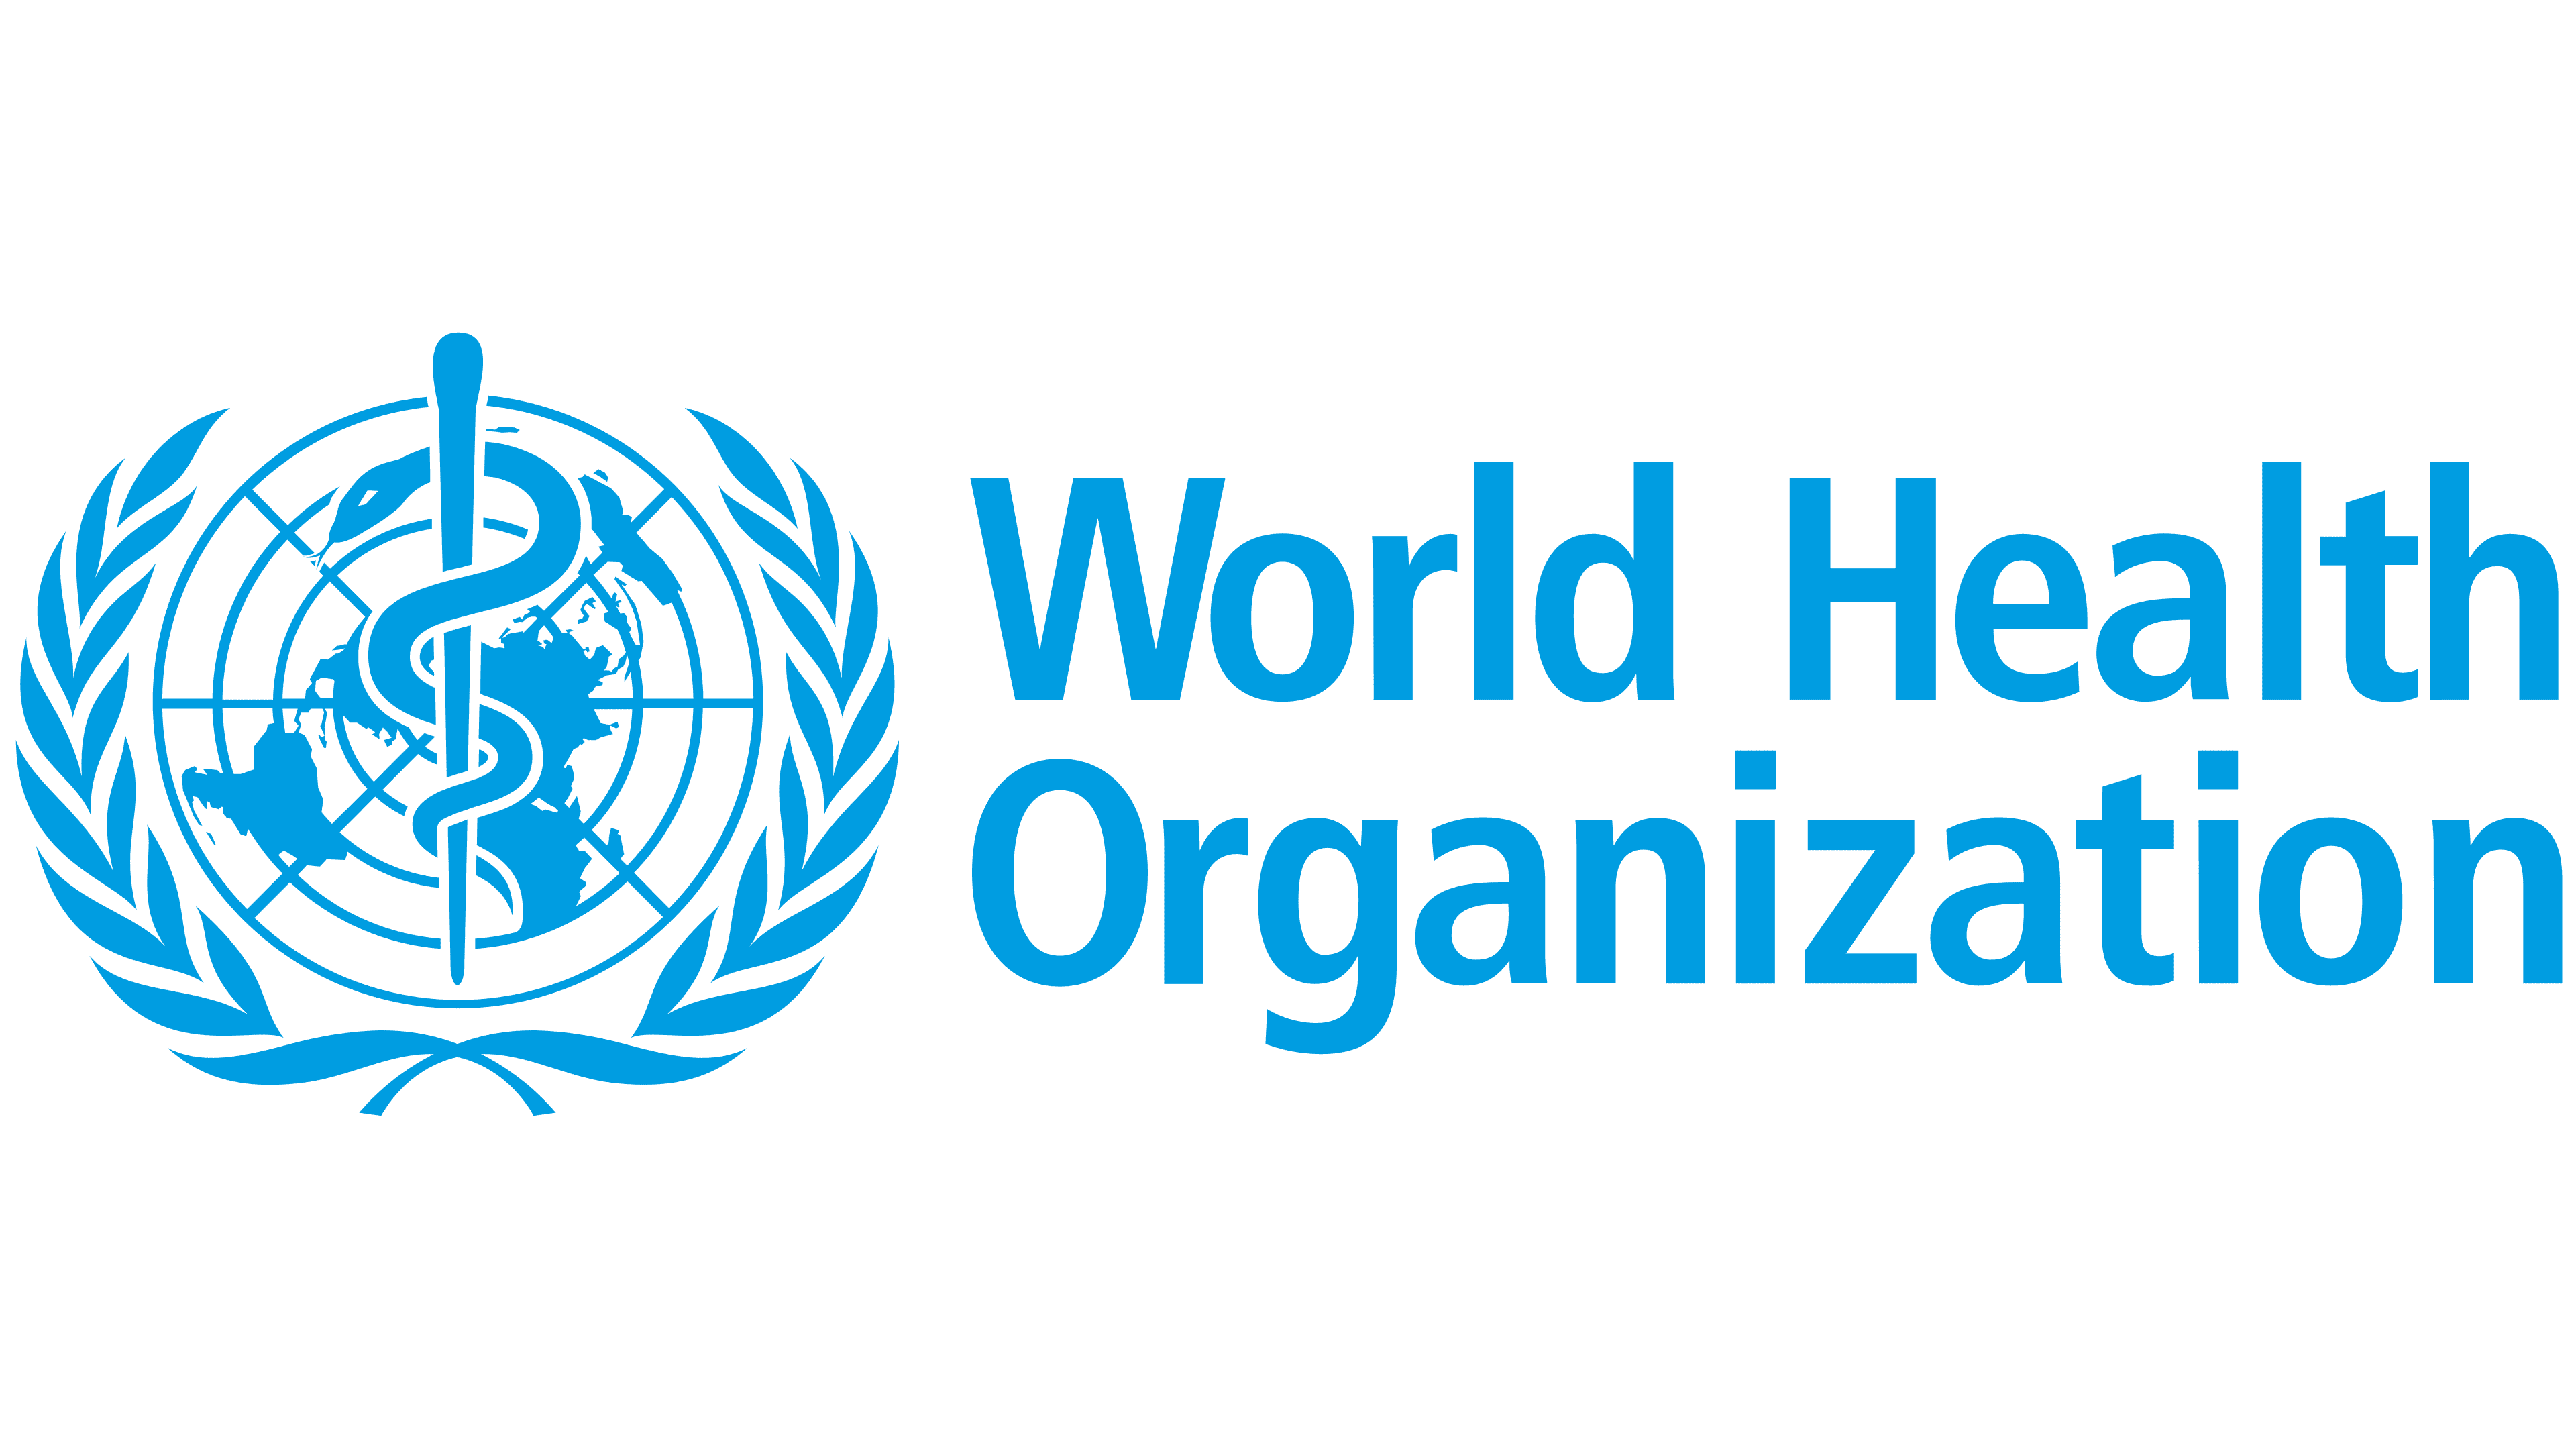 World Health Organization (WHO) logo